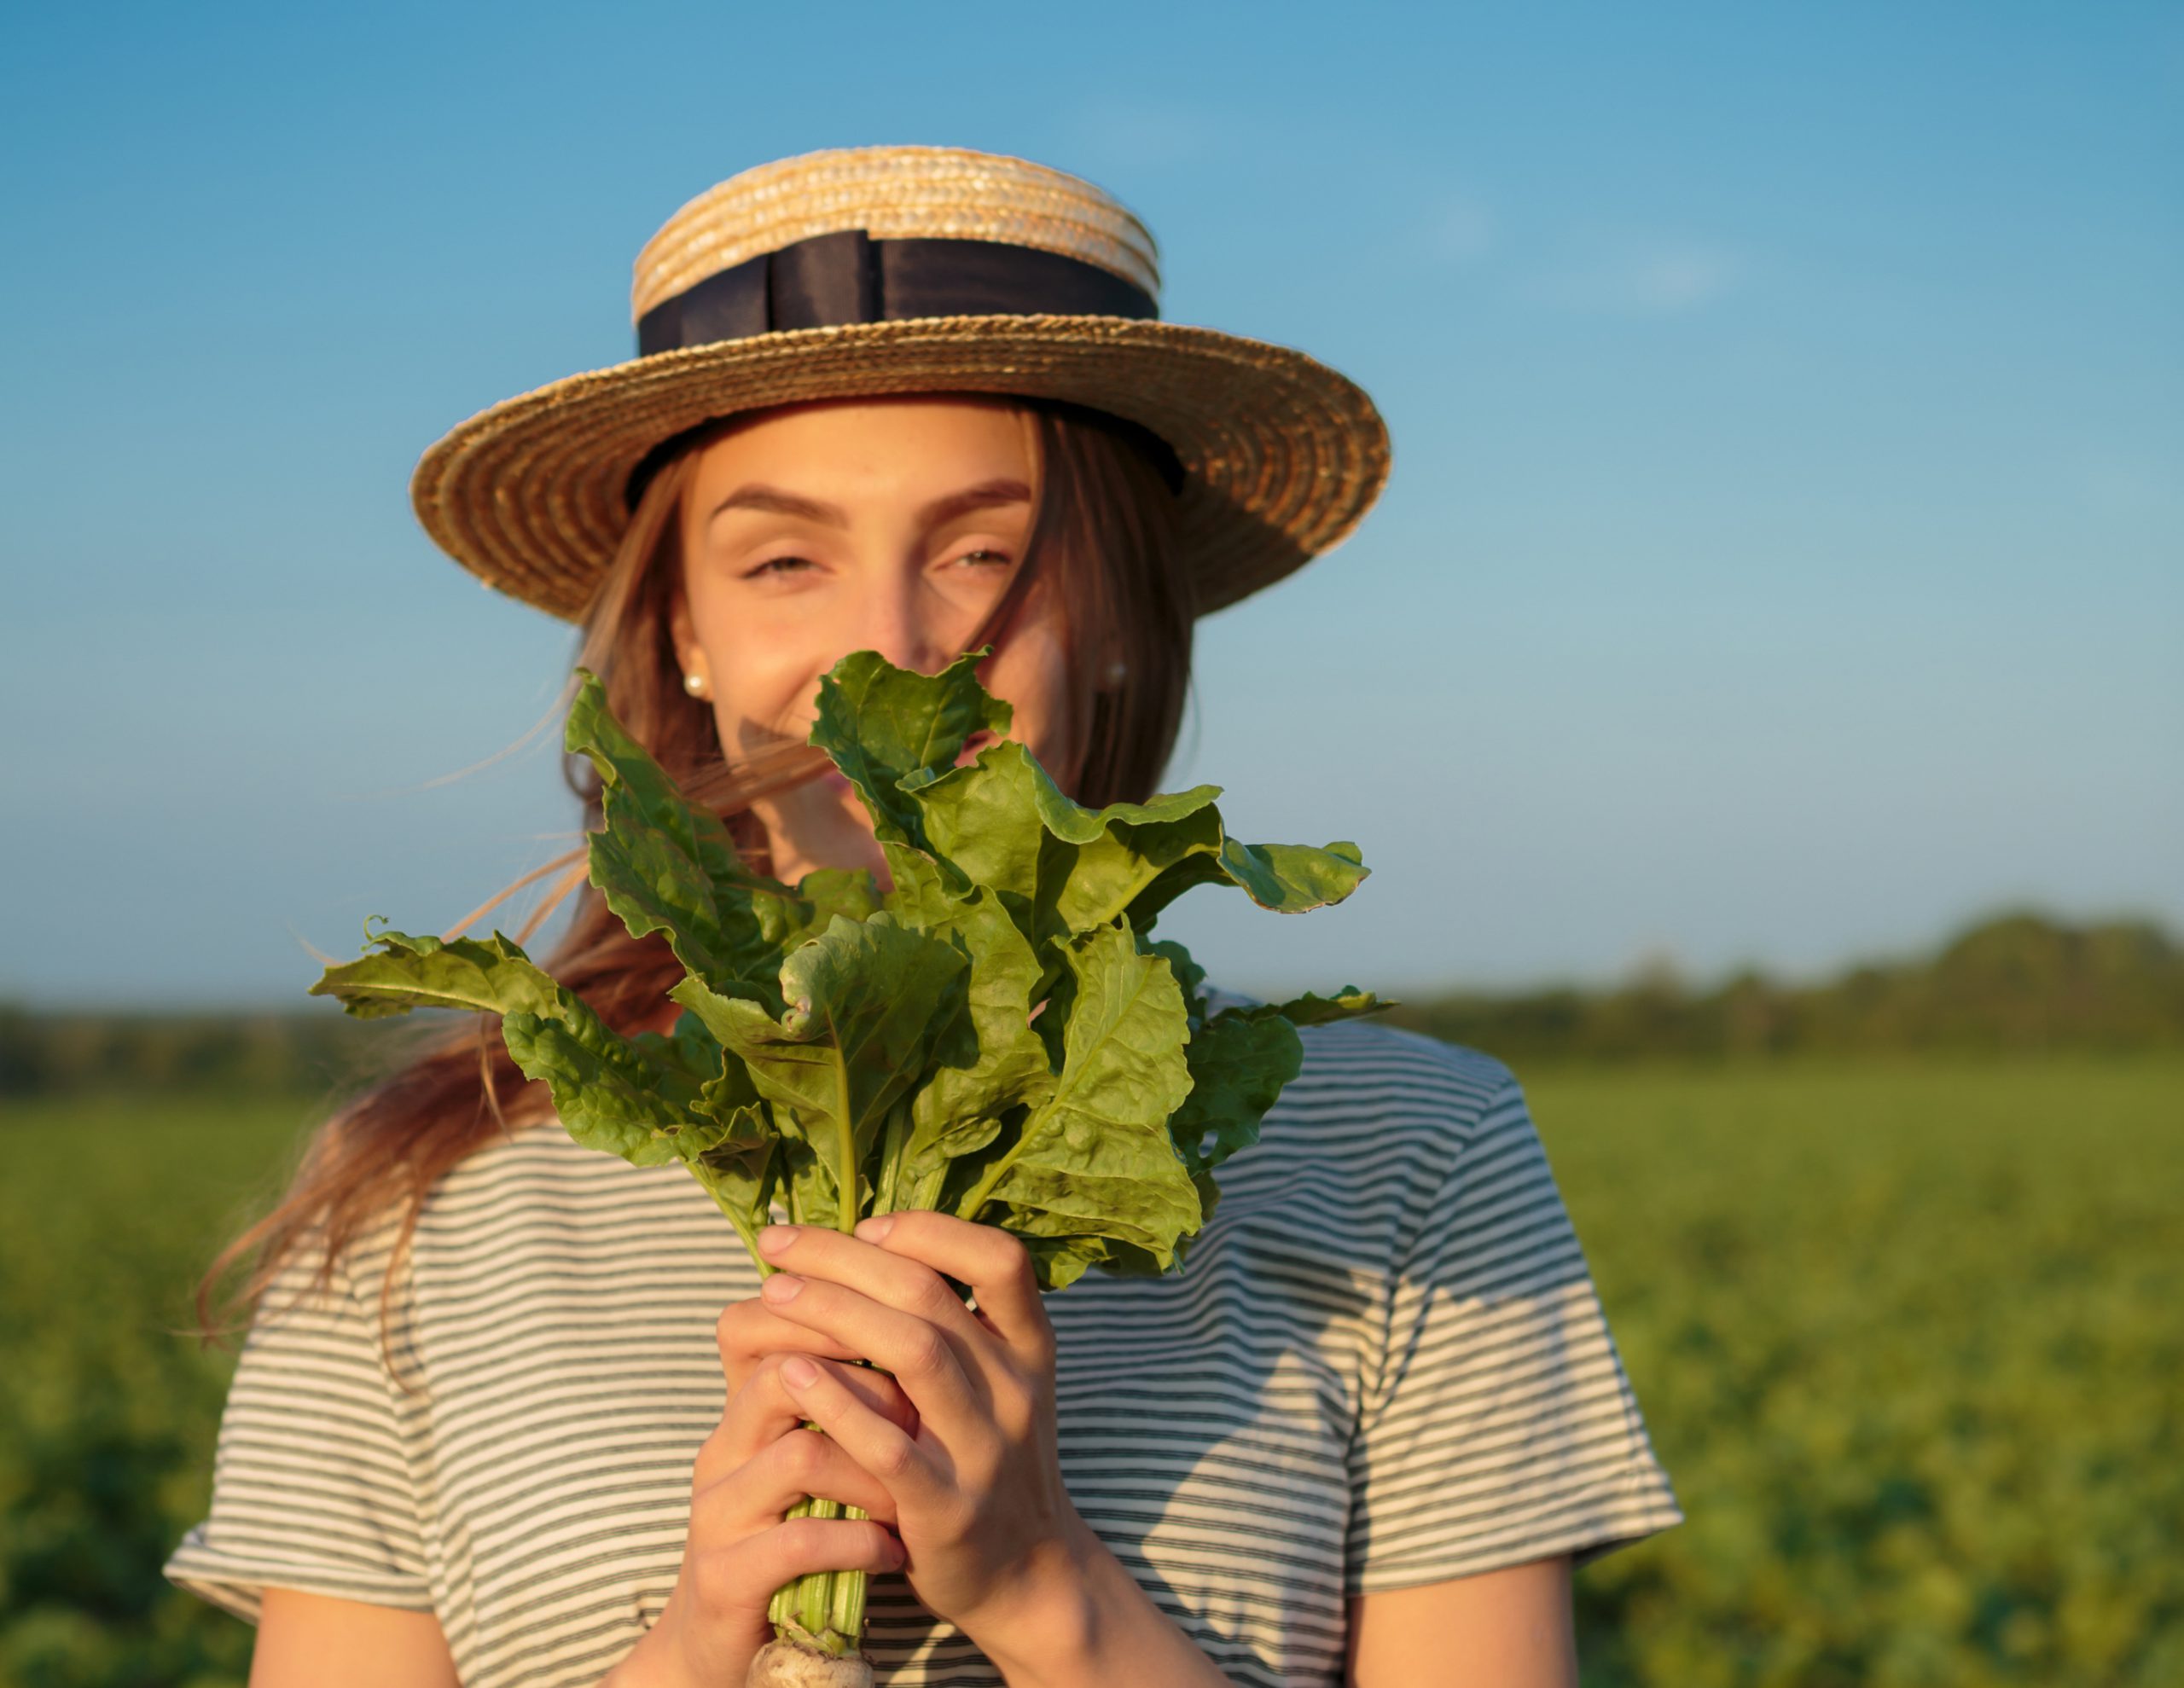 Girl farmer holding sugar beet in hands